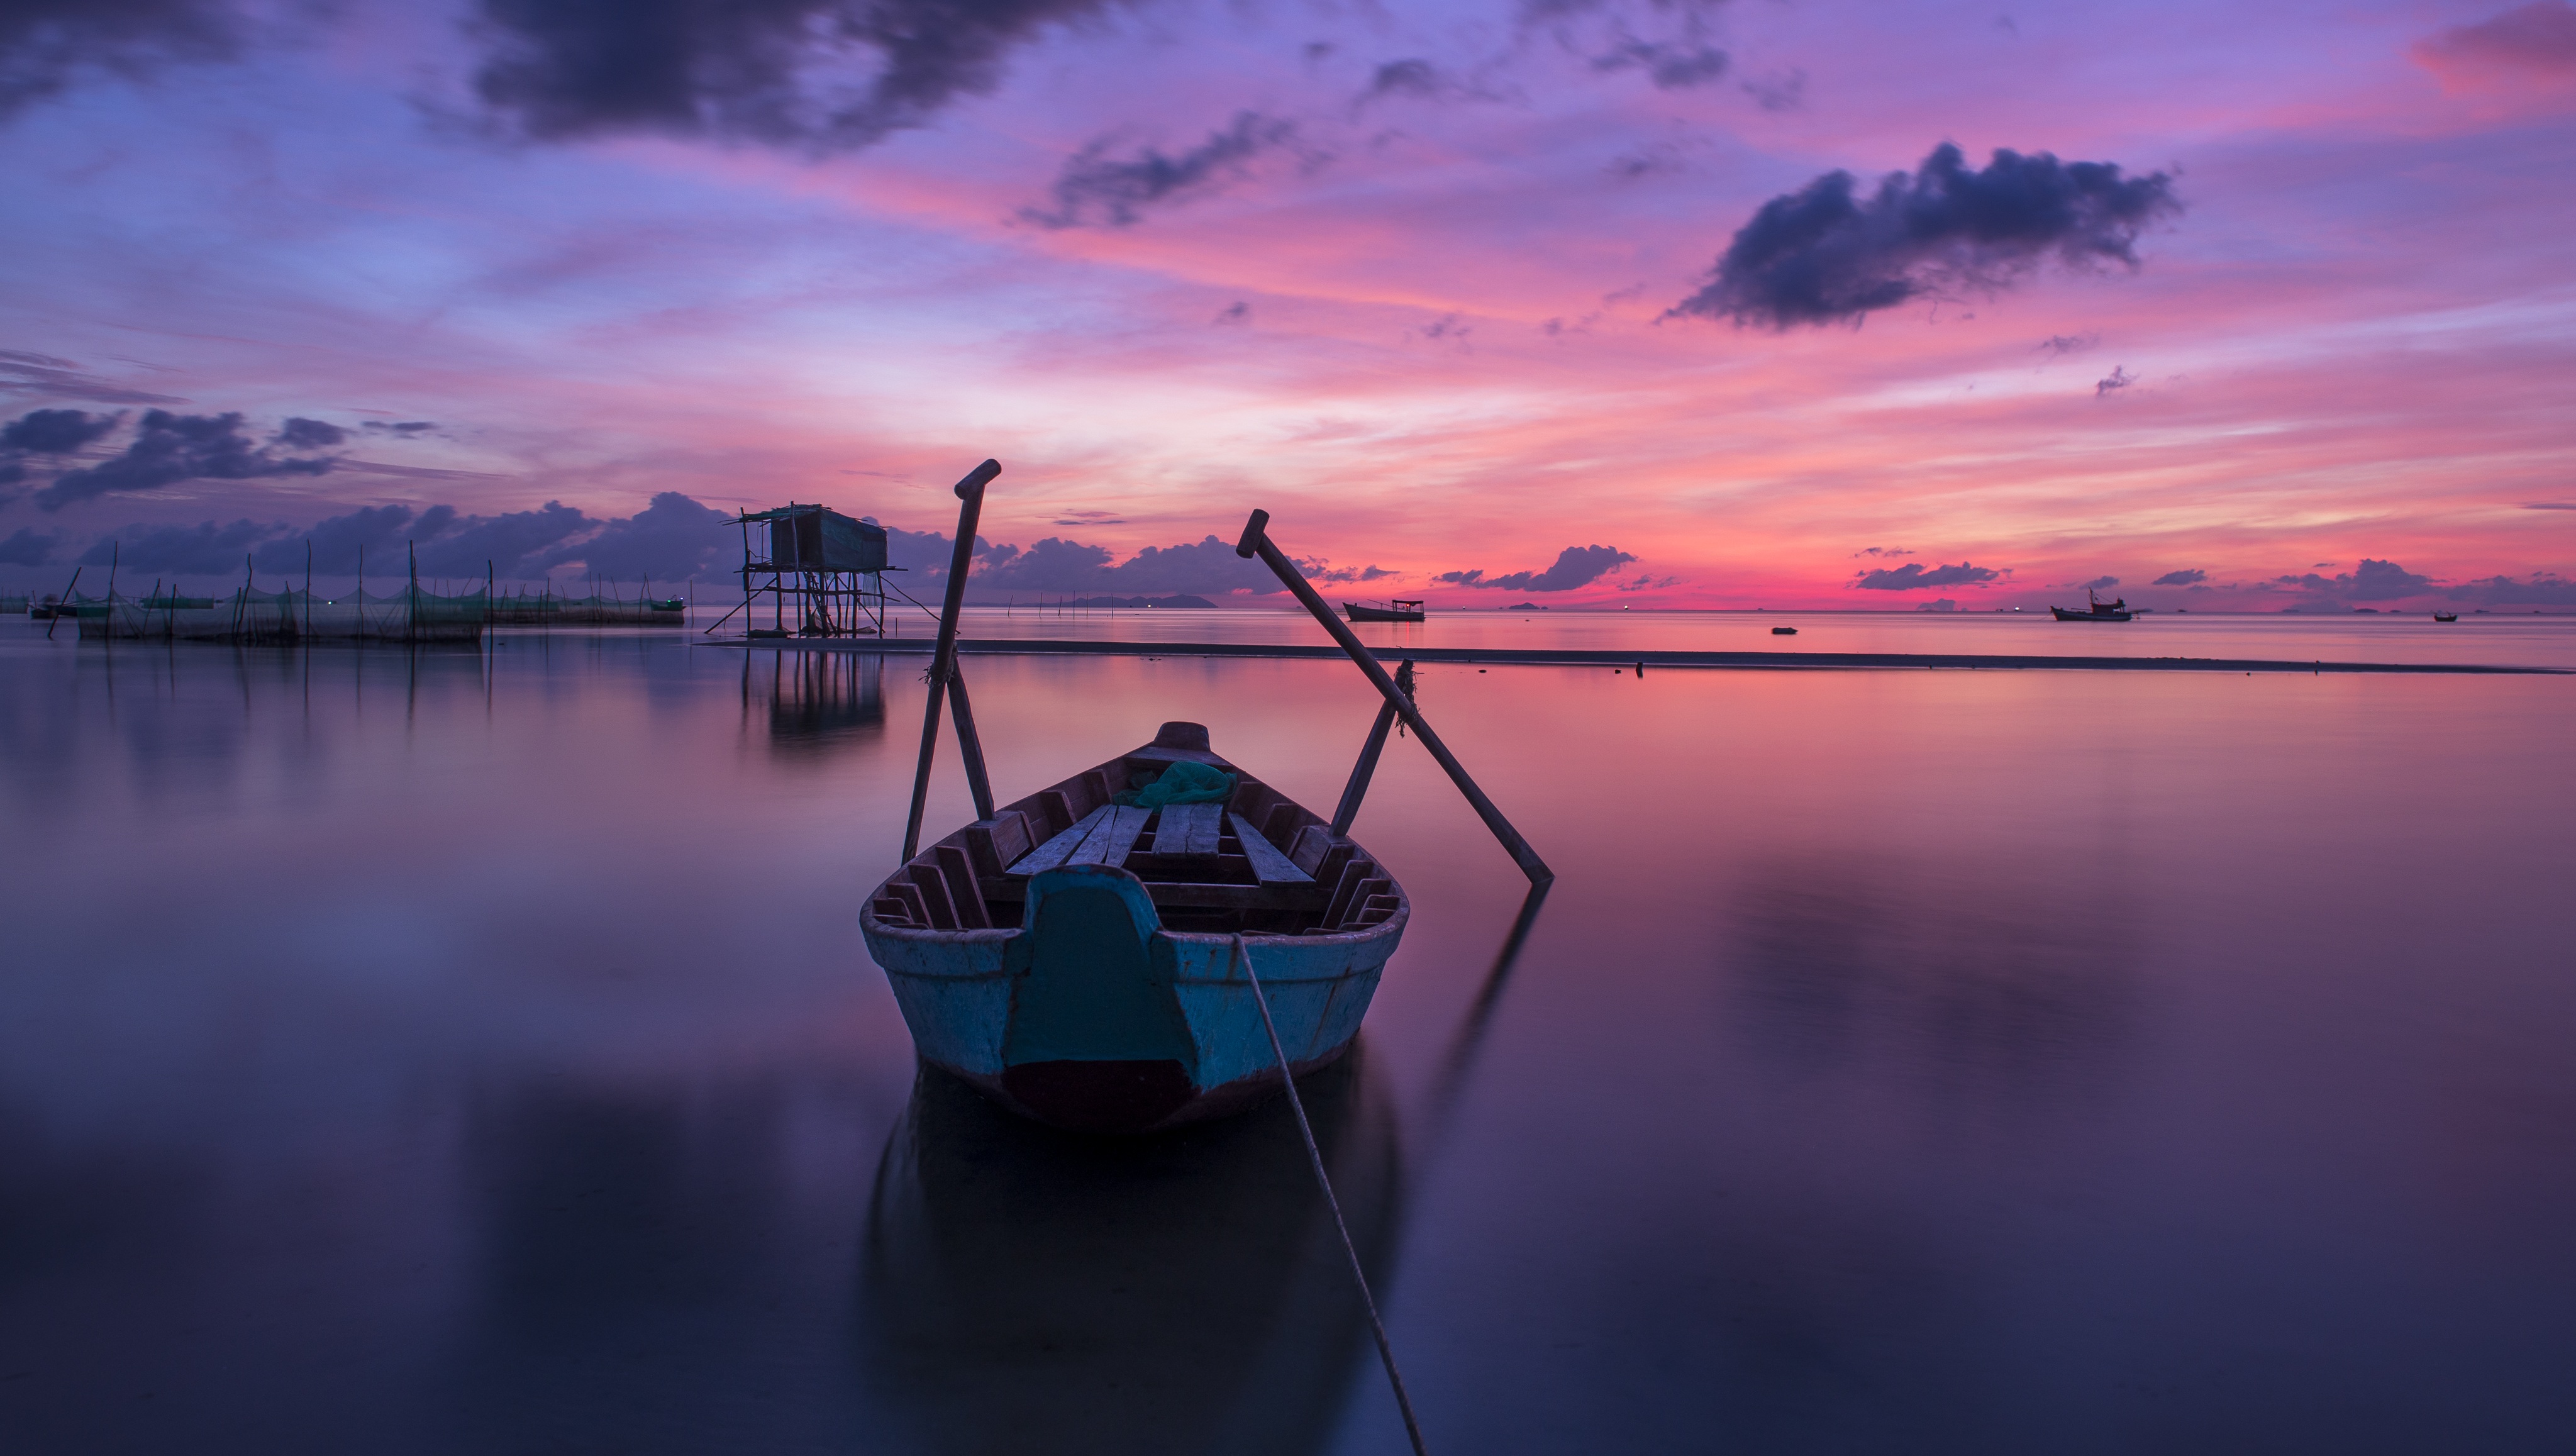 Бесплатное фото Деревянная лодка на море во время заката